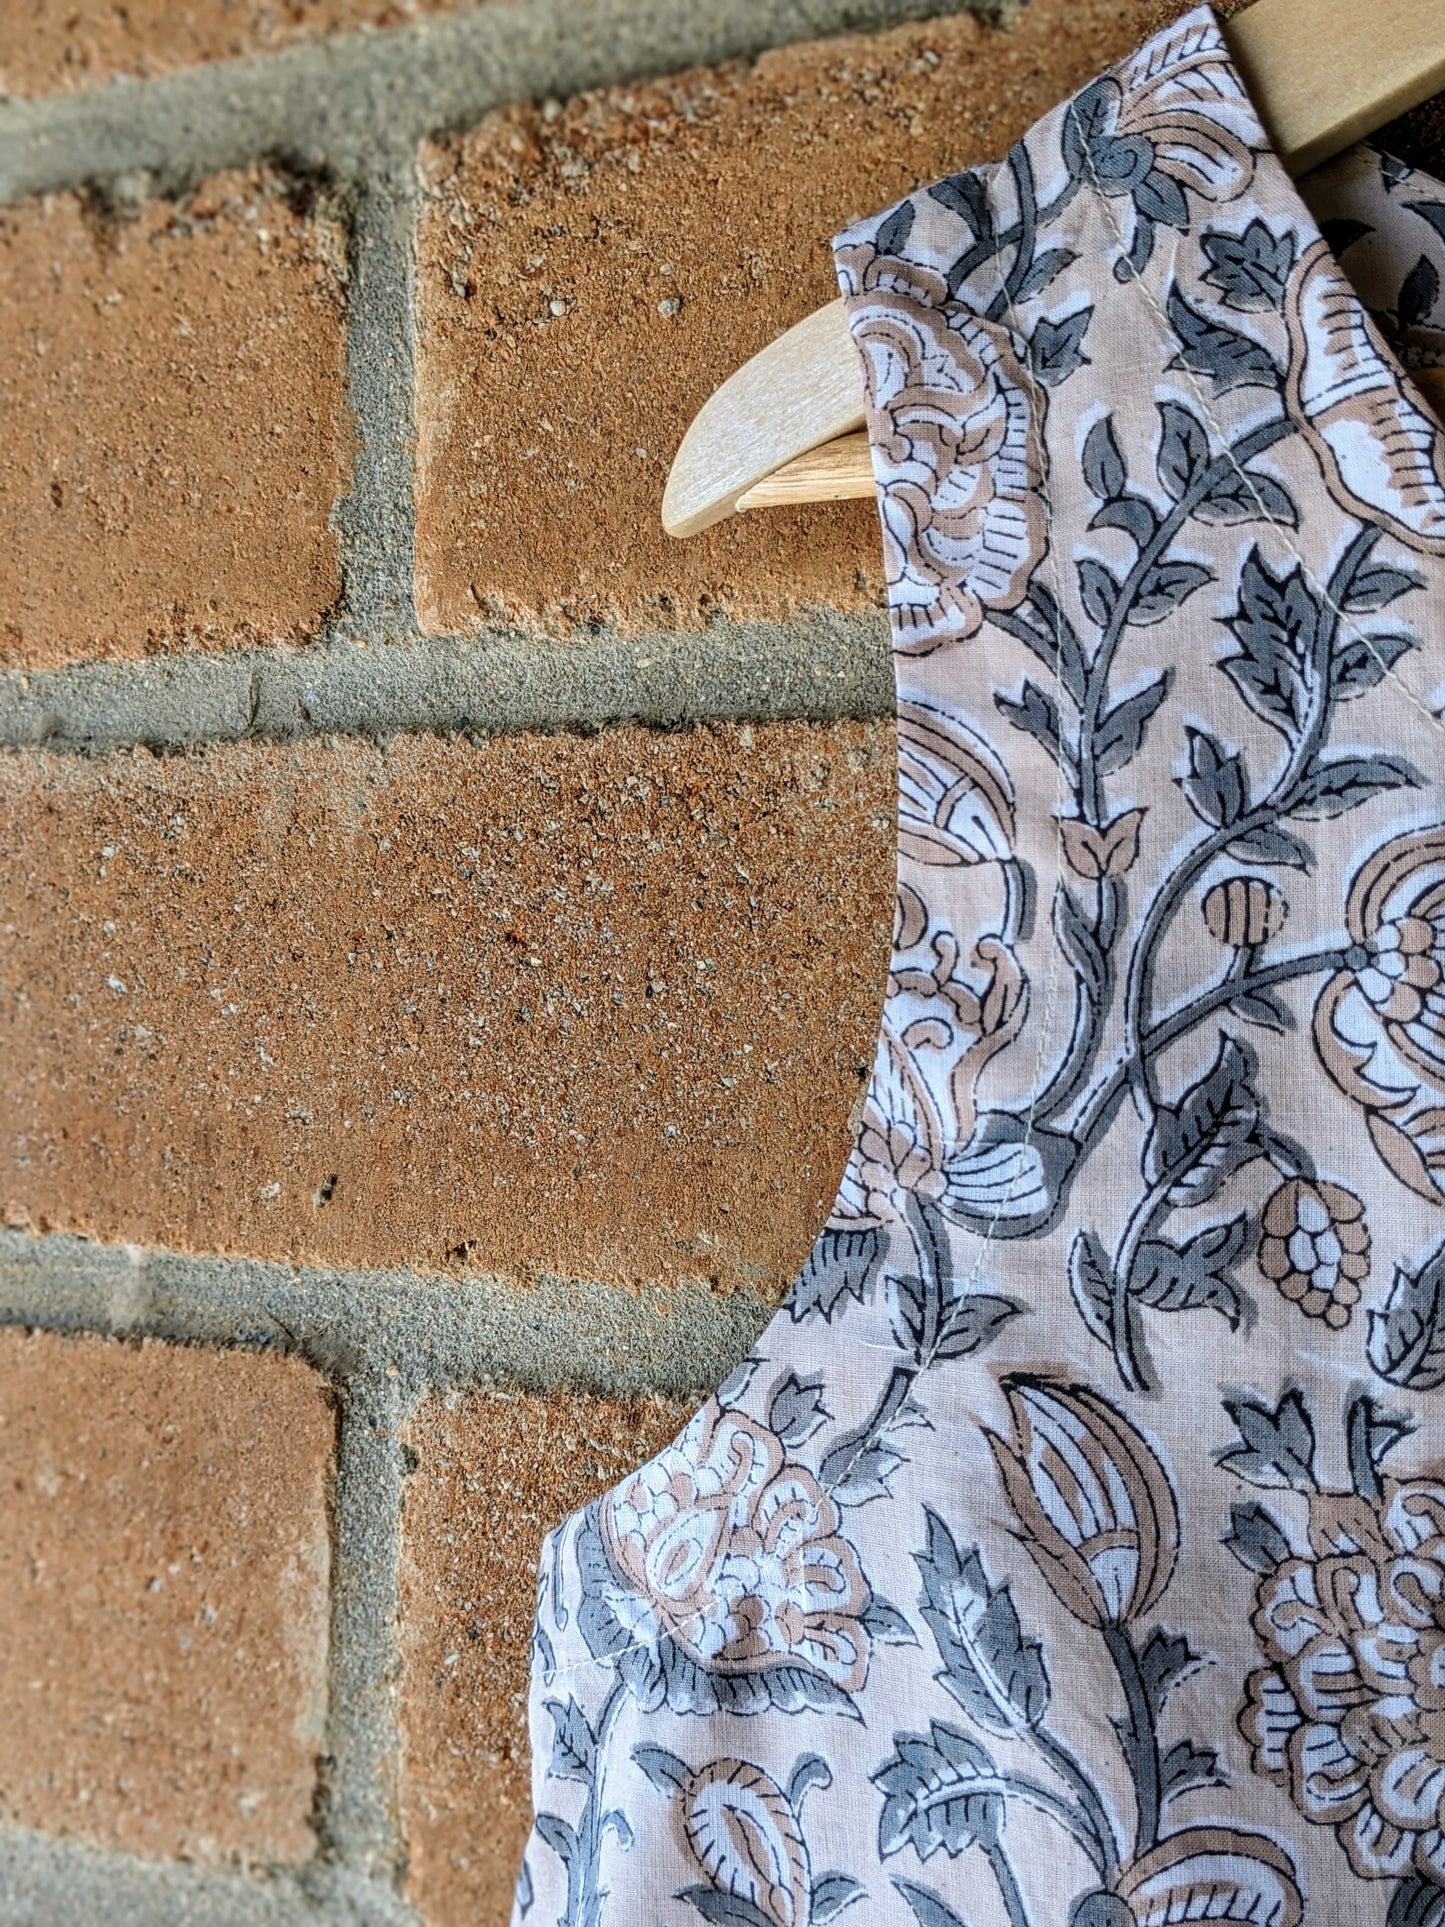 Women's Cotton Sleeveless Top -Ivory Floral Print - Closeup Image